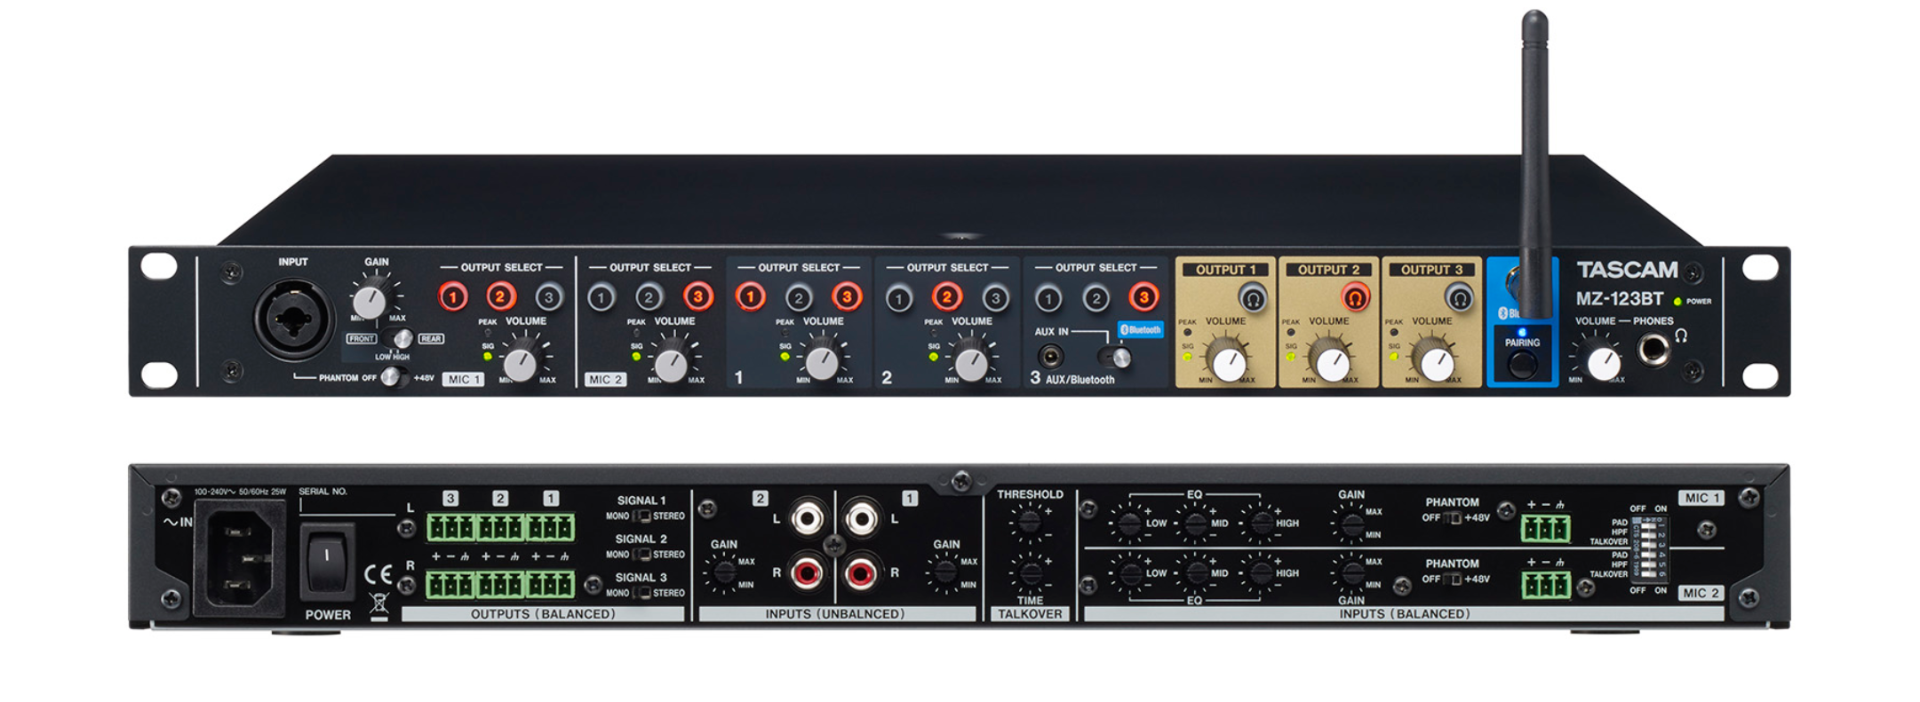 Tascam MZ-123BT - Commercial-grade Multi-Zone Audio Mixer